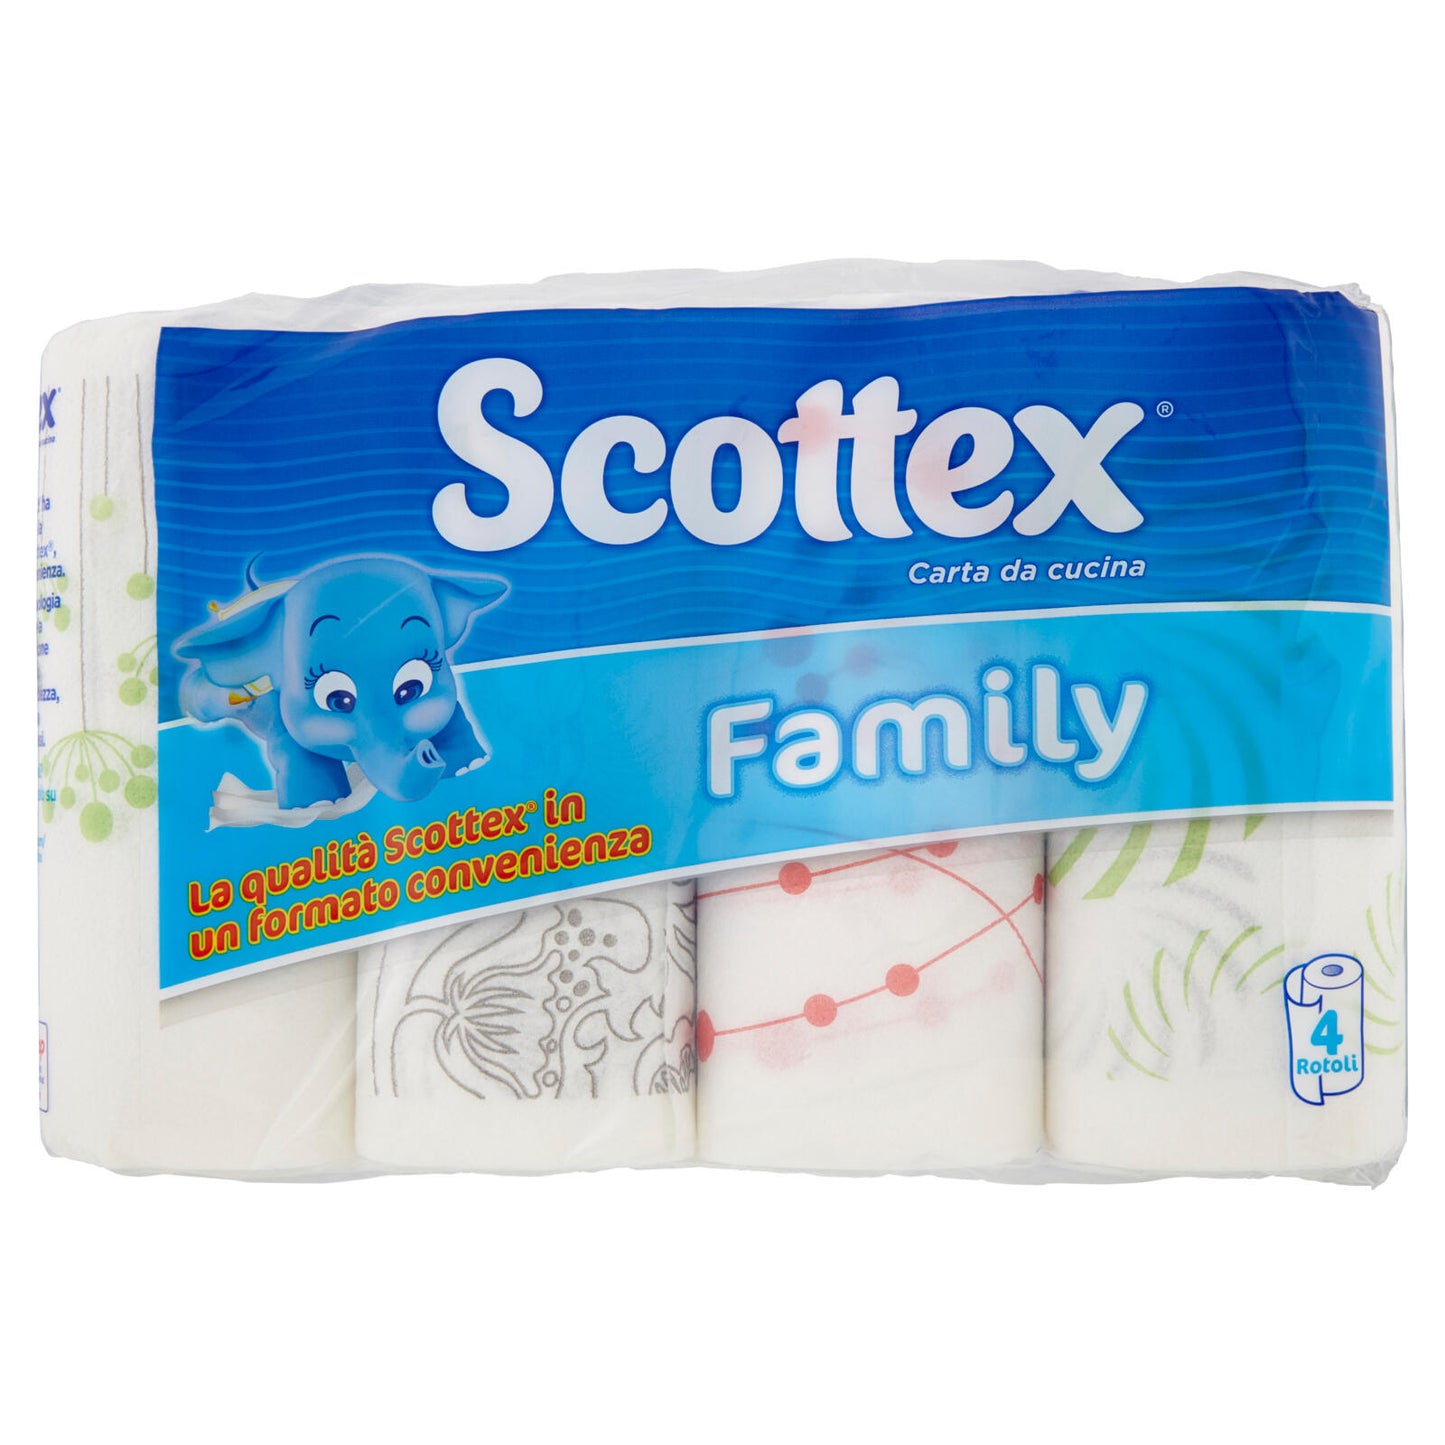 Scottex Family Carta da cucina 4 rotoli